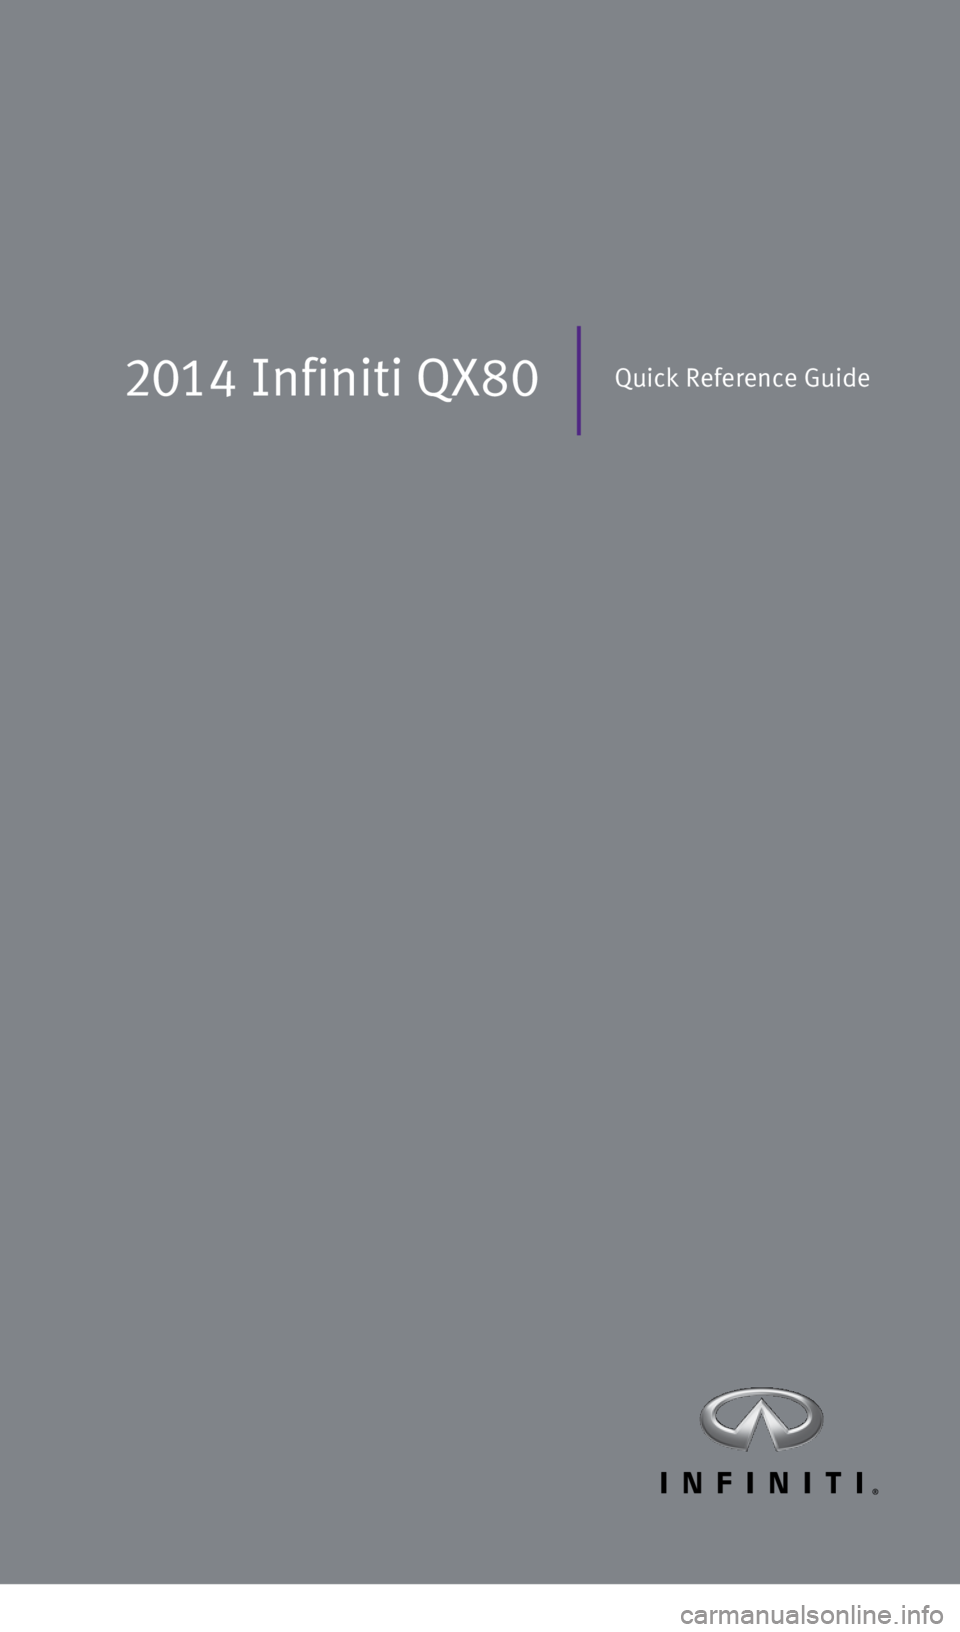 INFINITI QX80 2014  Quick Reference Guide 2014 Infiniti QX80Quick Reference Guide
1591592_14b_Infiniti_QX80_QRG_093013.indd   39/30/13   9:34 AM 